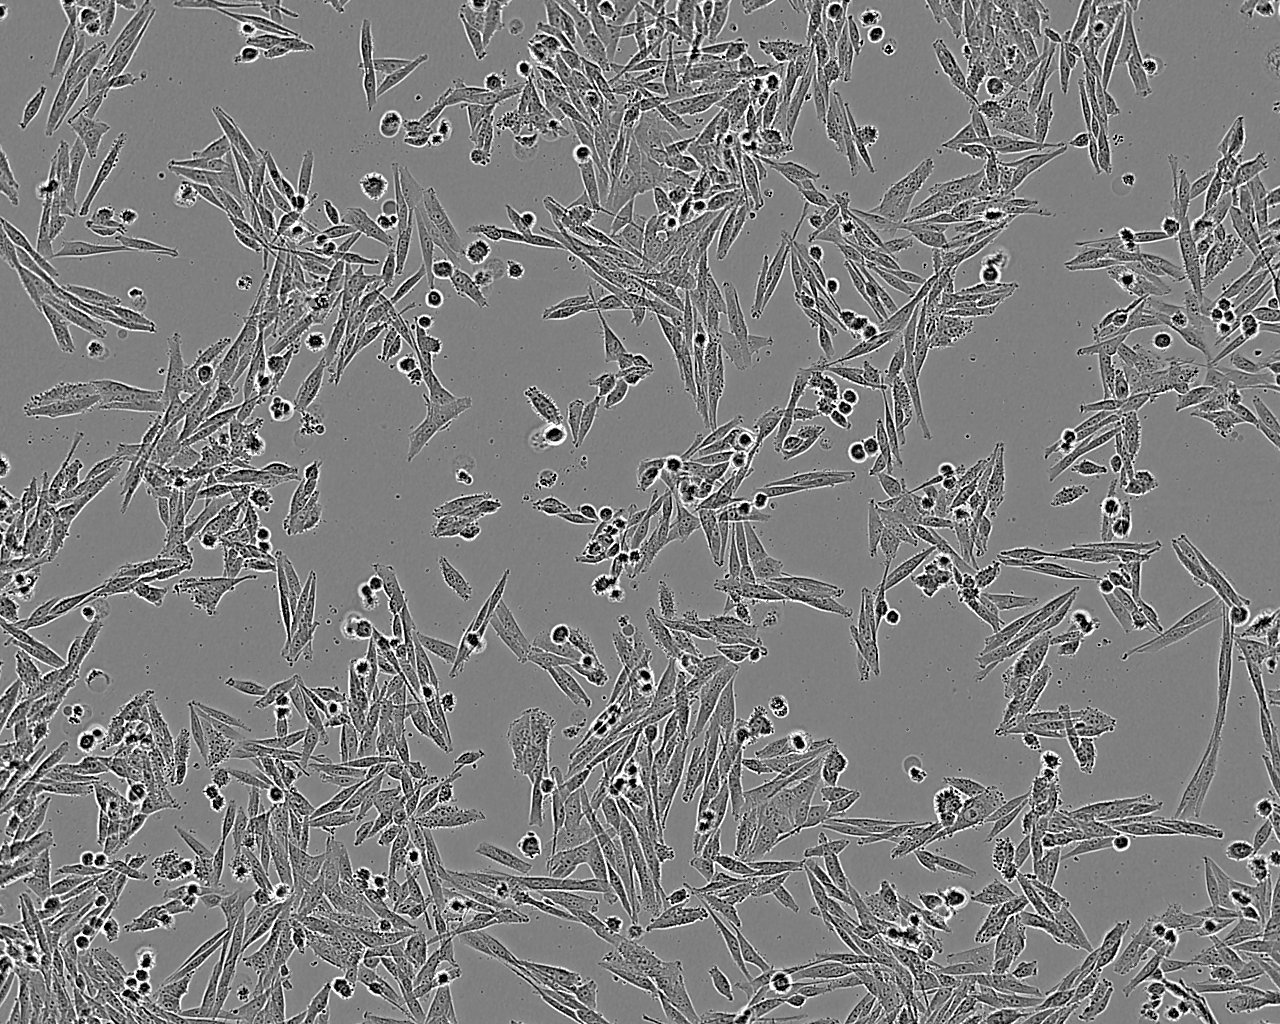 U-373MG ATCC epithelioid cells人胶质瘤细胞系